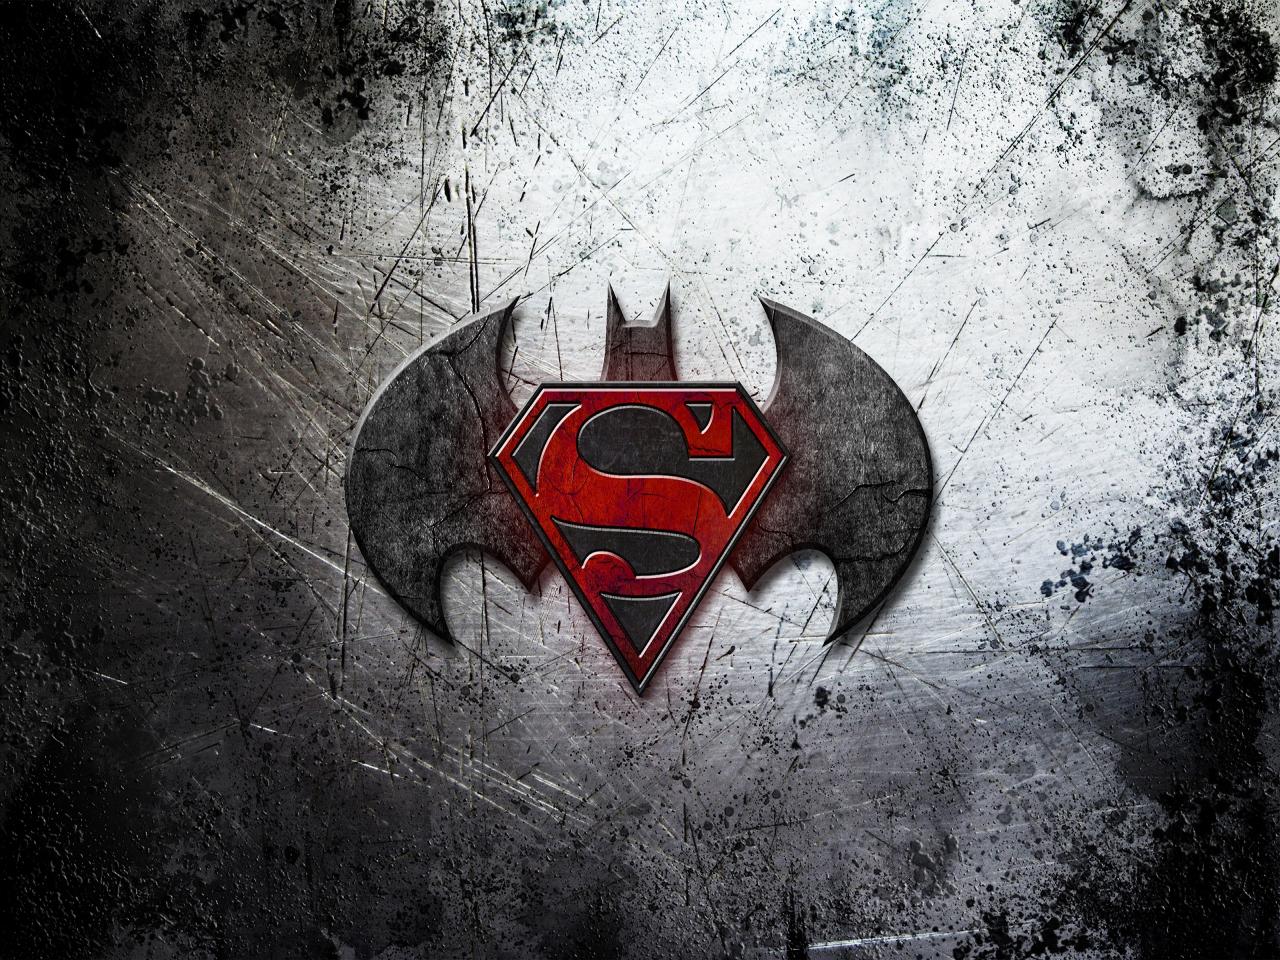 Batman vs superman logo wallpaper hd background hd